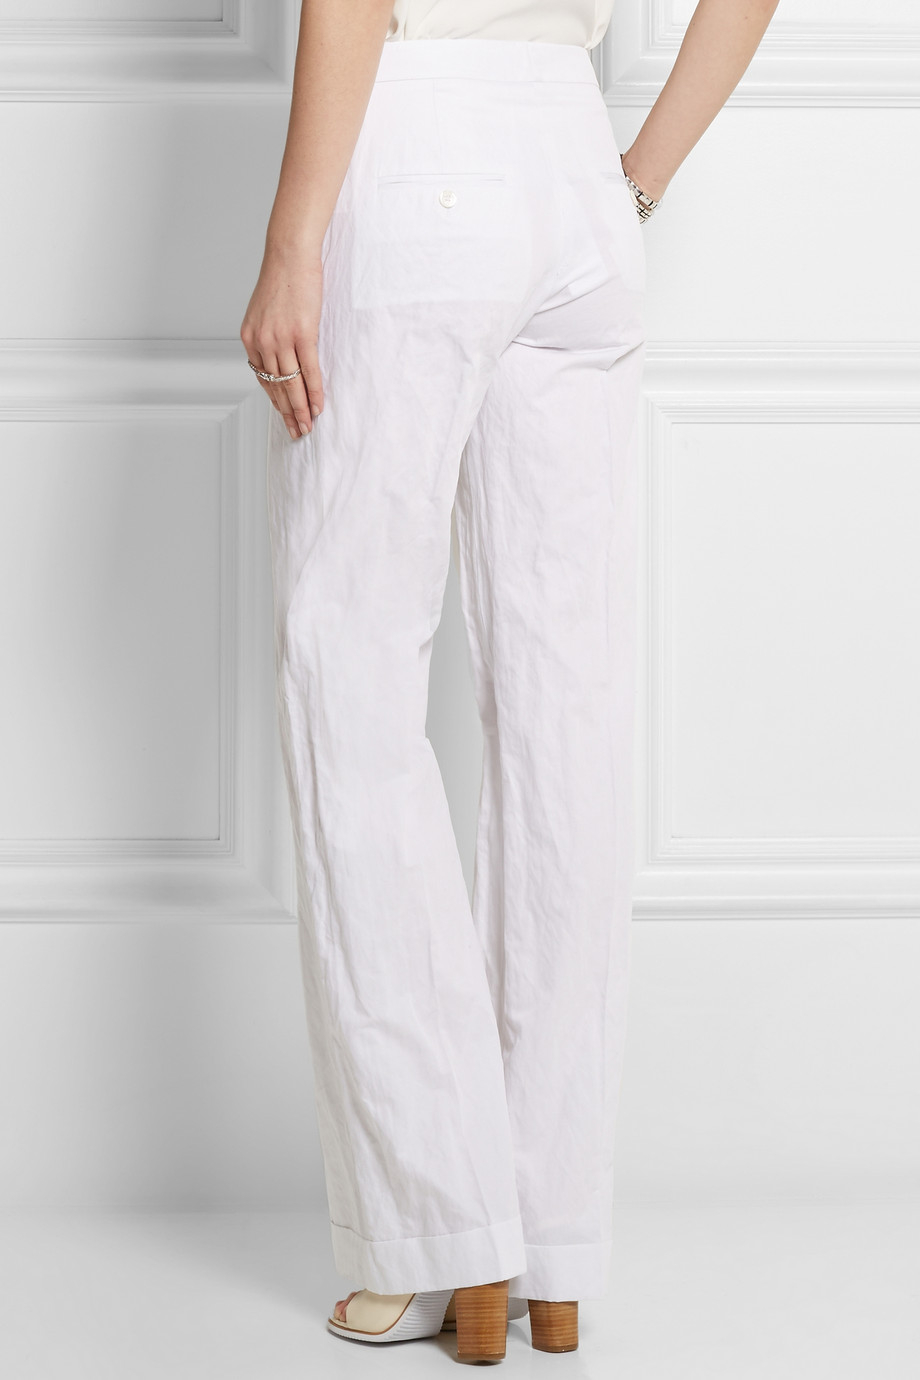 Lyst - Michael Kors Crinkled Cotton-Blend Wide-Leg Pants in White